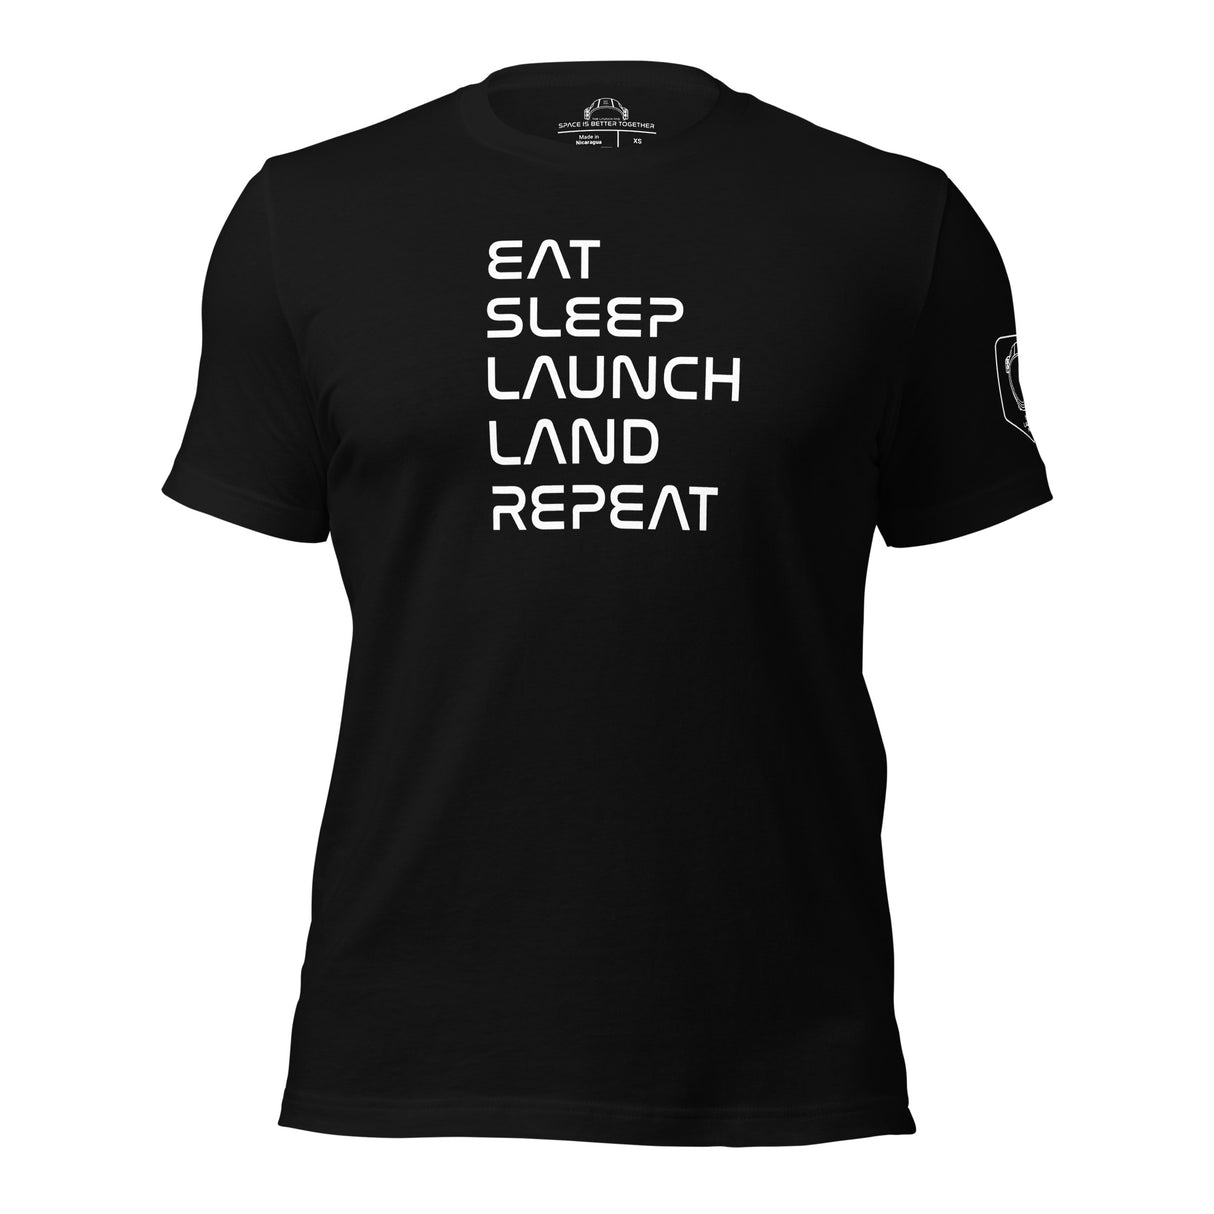 Eat, Sleep, Launch, Land, Repeat Tee